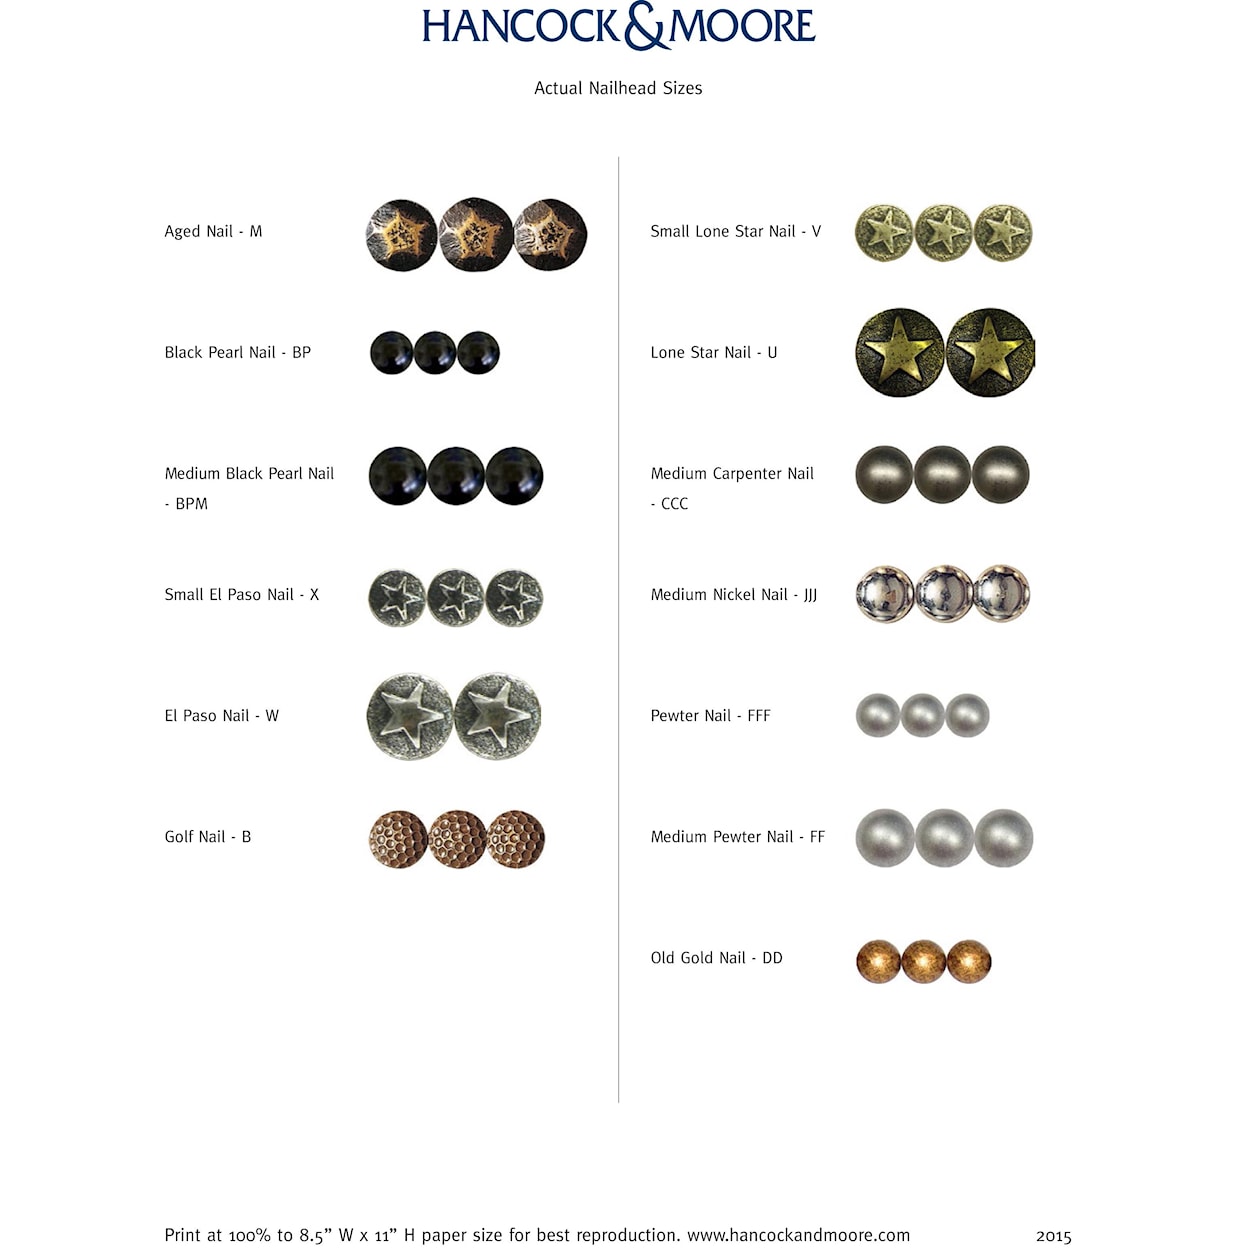 Hancock & Moore Monaco Sofa